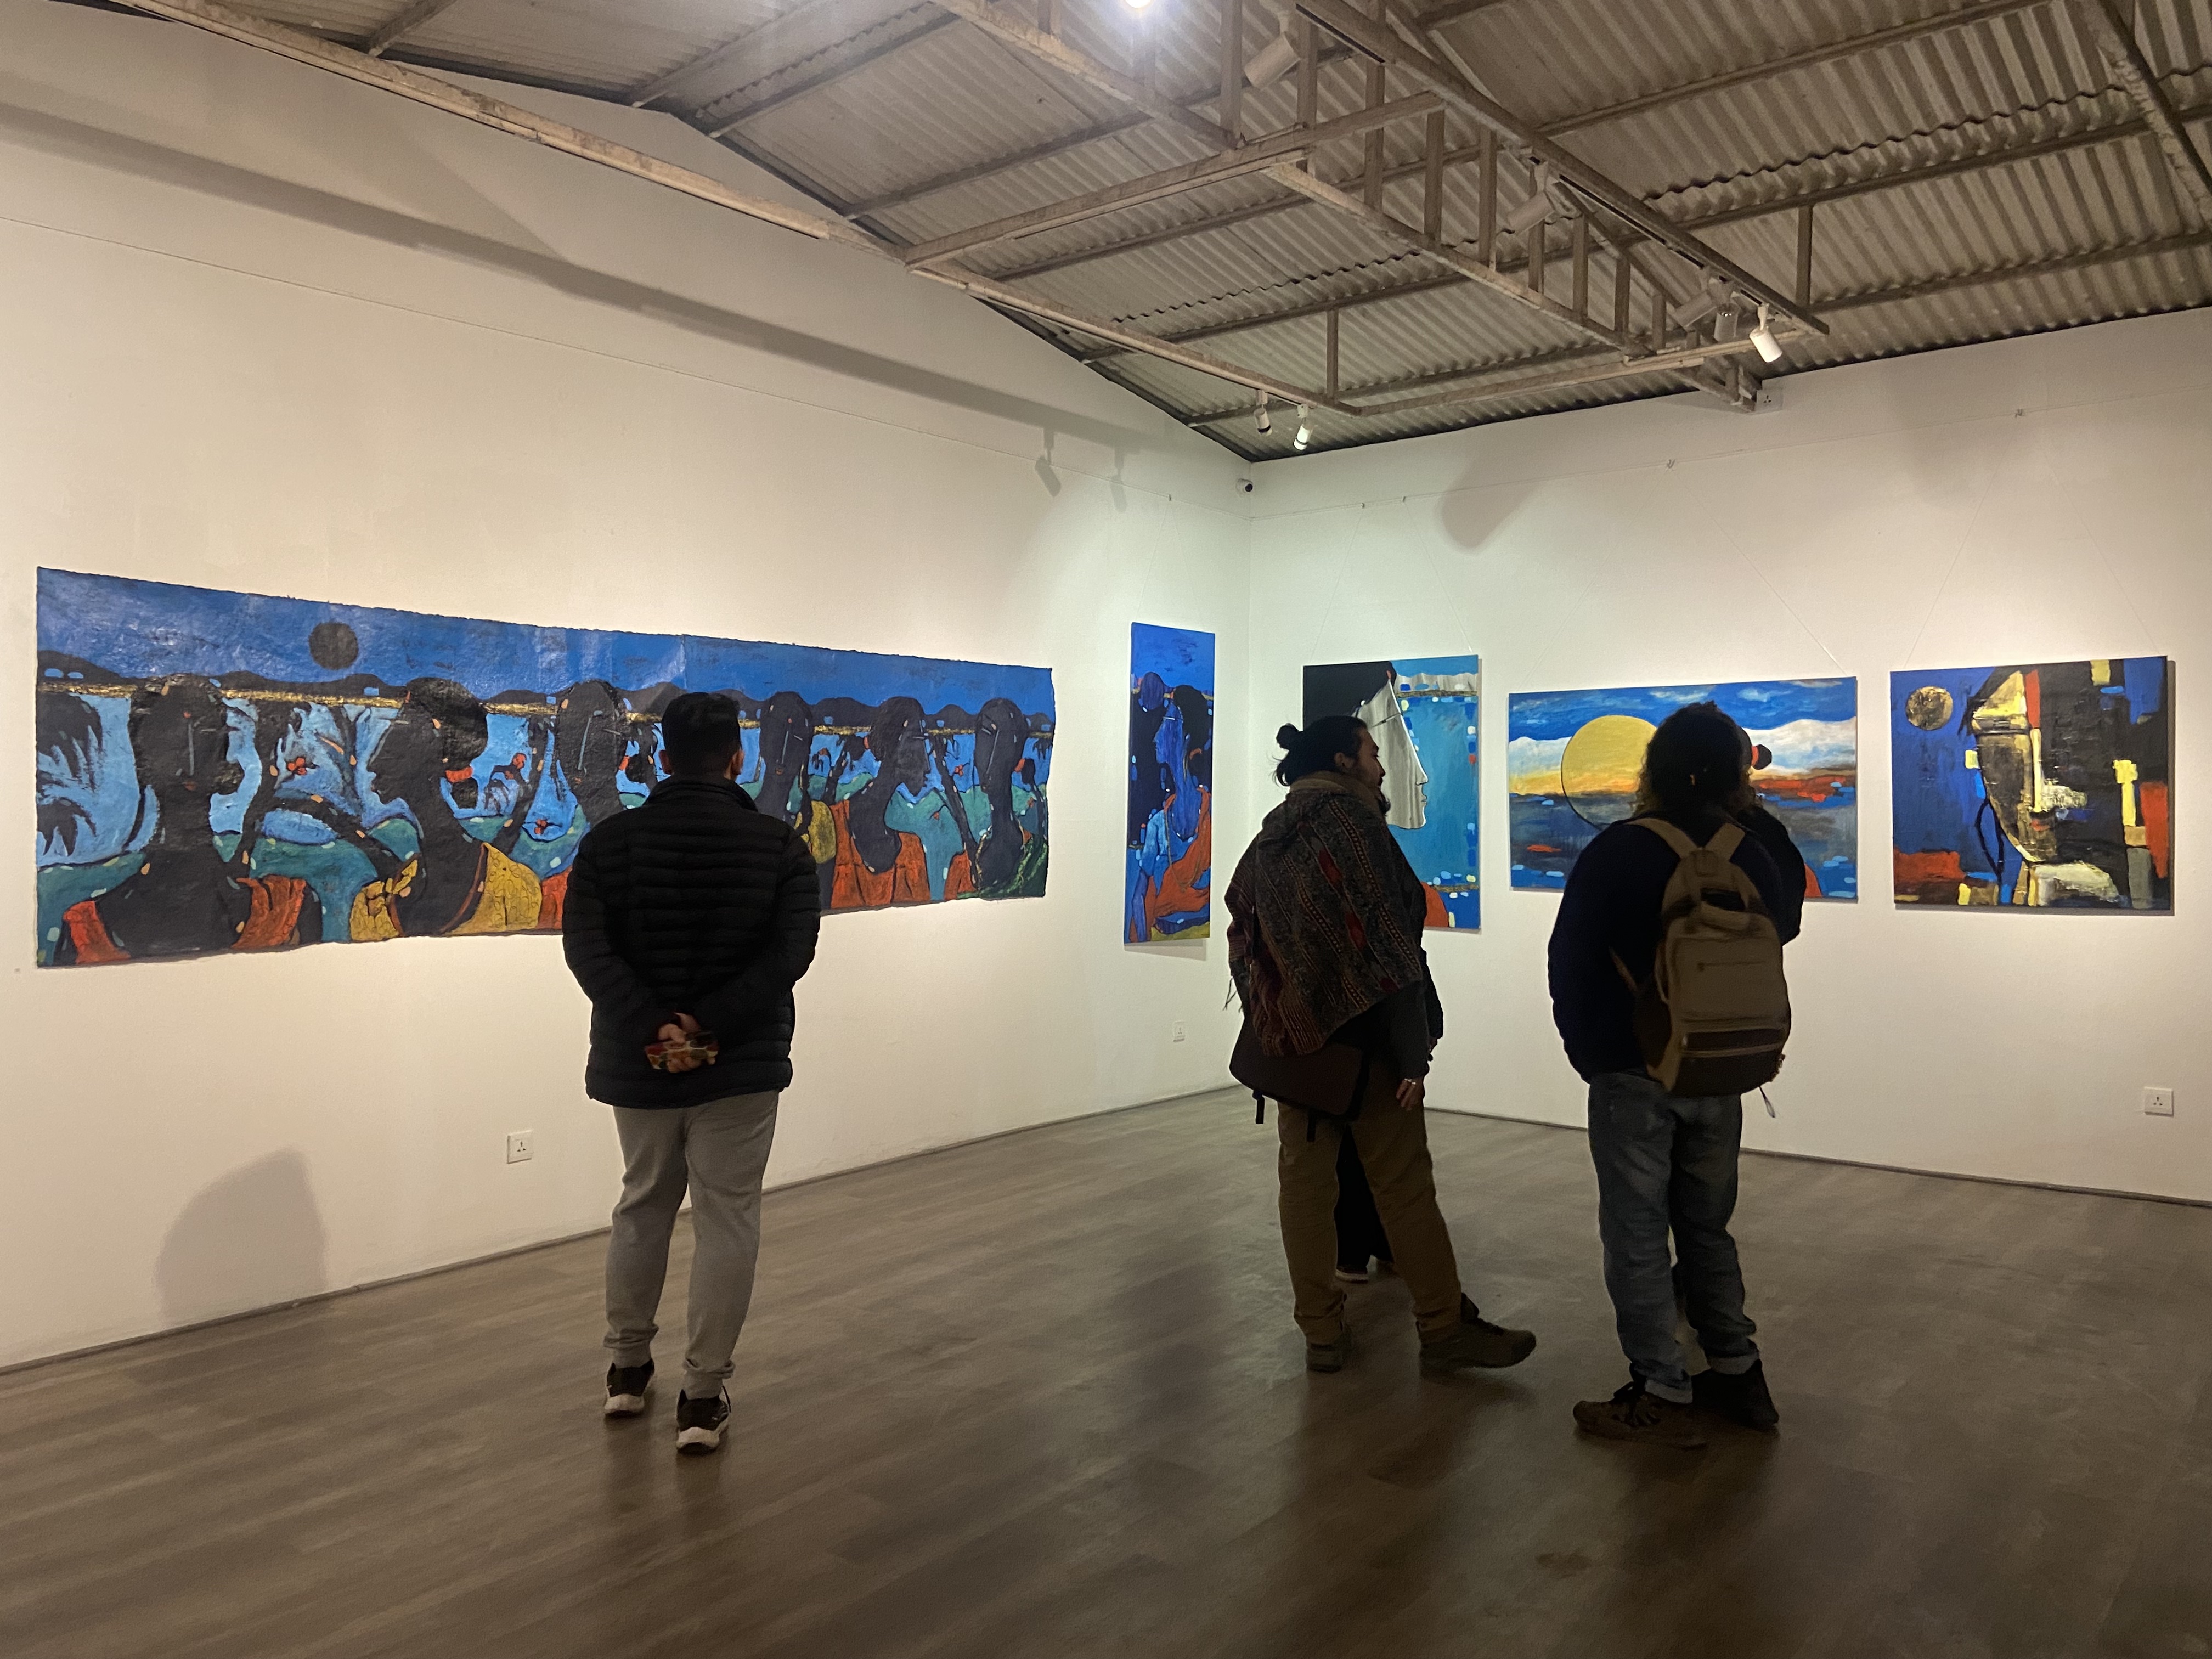 Pramila Bajracharya’s solo painting exhibition ‘Womanhood’ on display